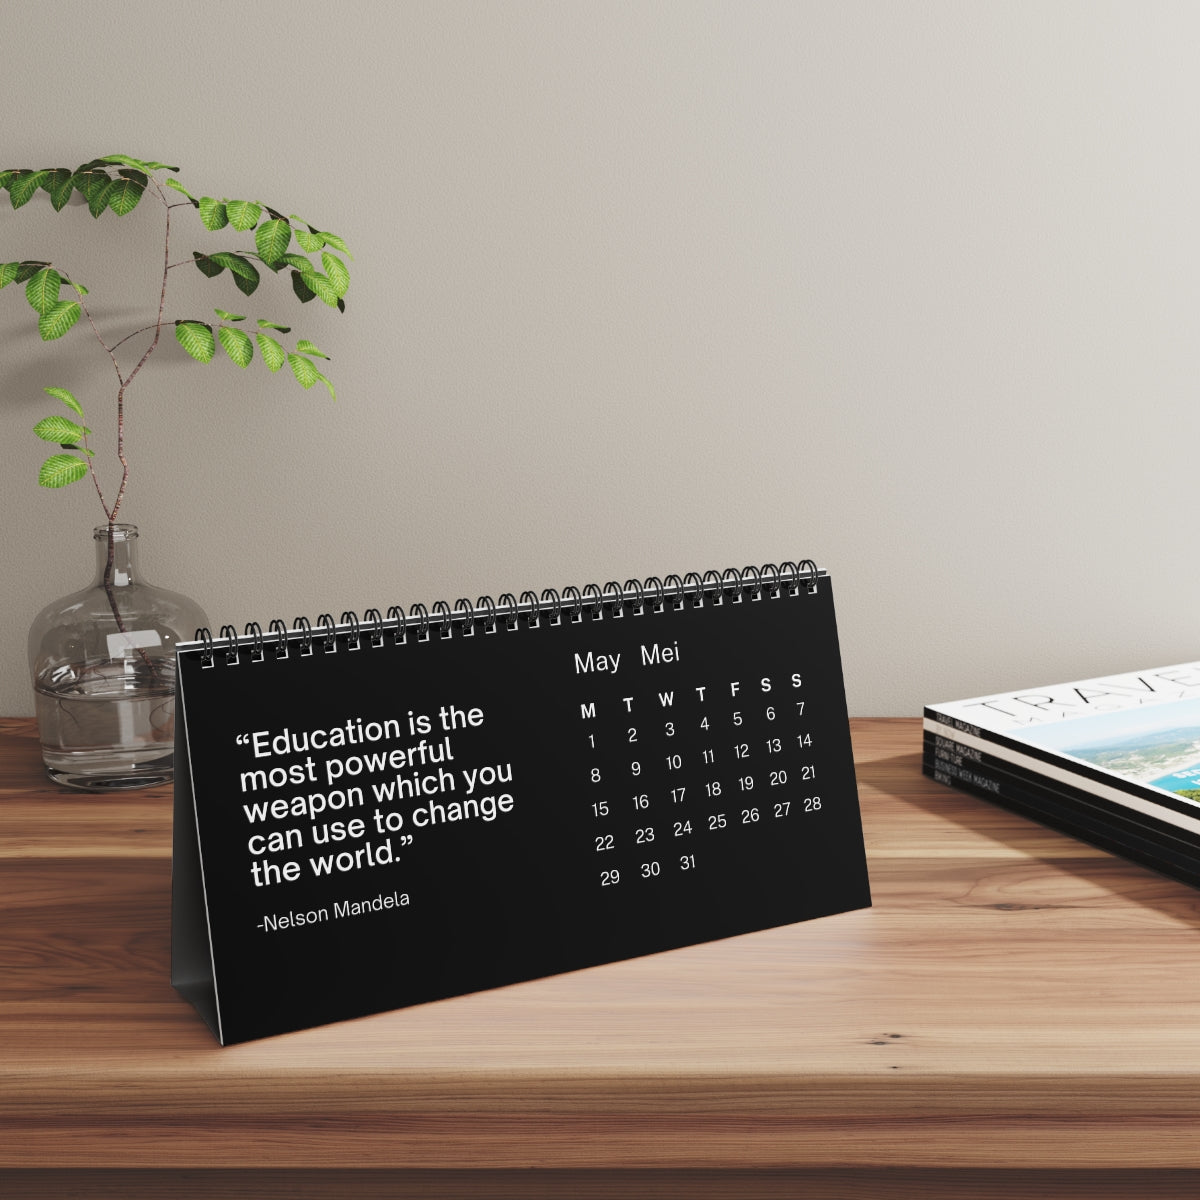 Words of Mandela 2023 Desk Calendar